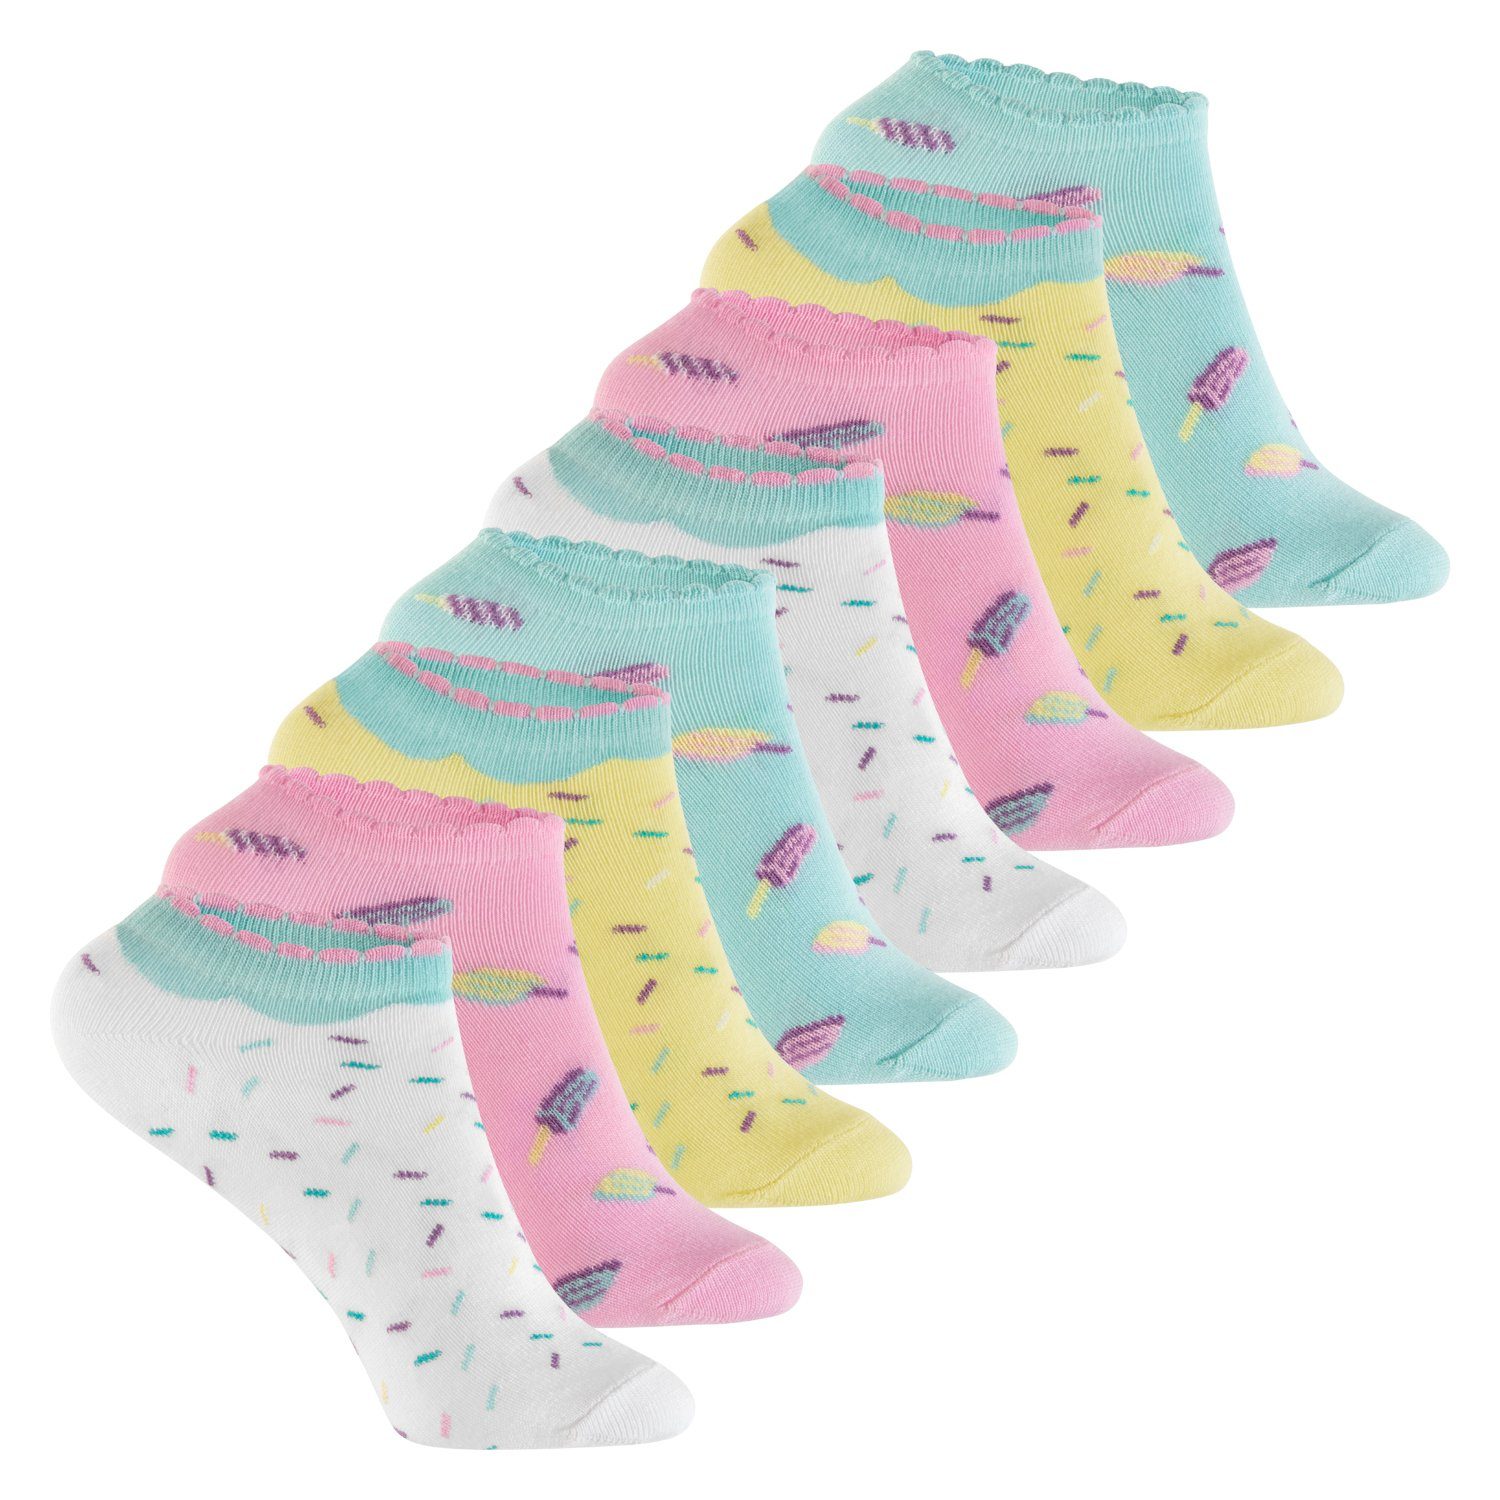 Footstar Kurzsocken Kinder Sneaker Socken (8 Paar) für Mädchen & Jungen, bunt pastell mix